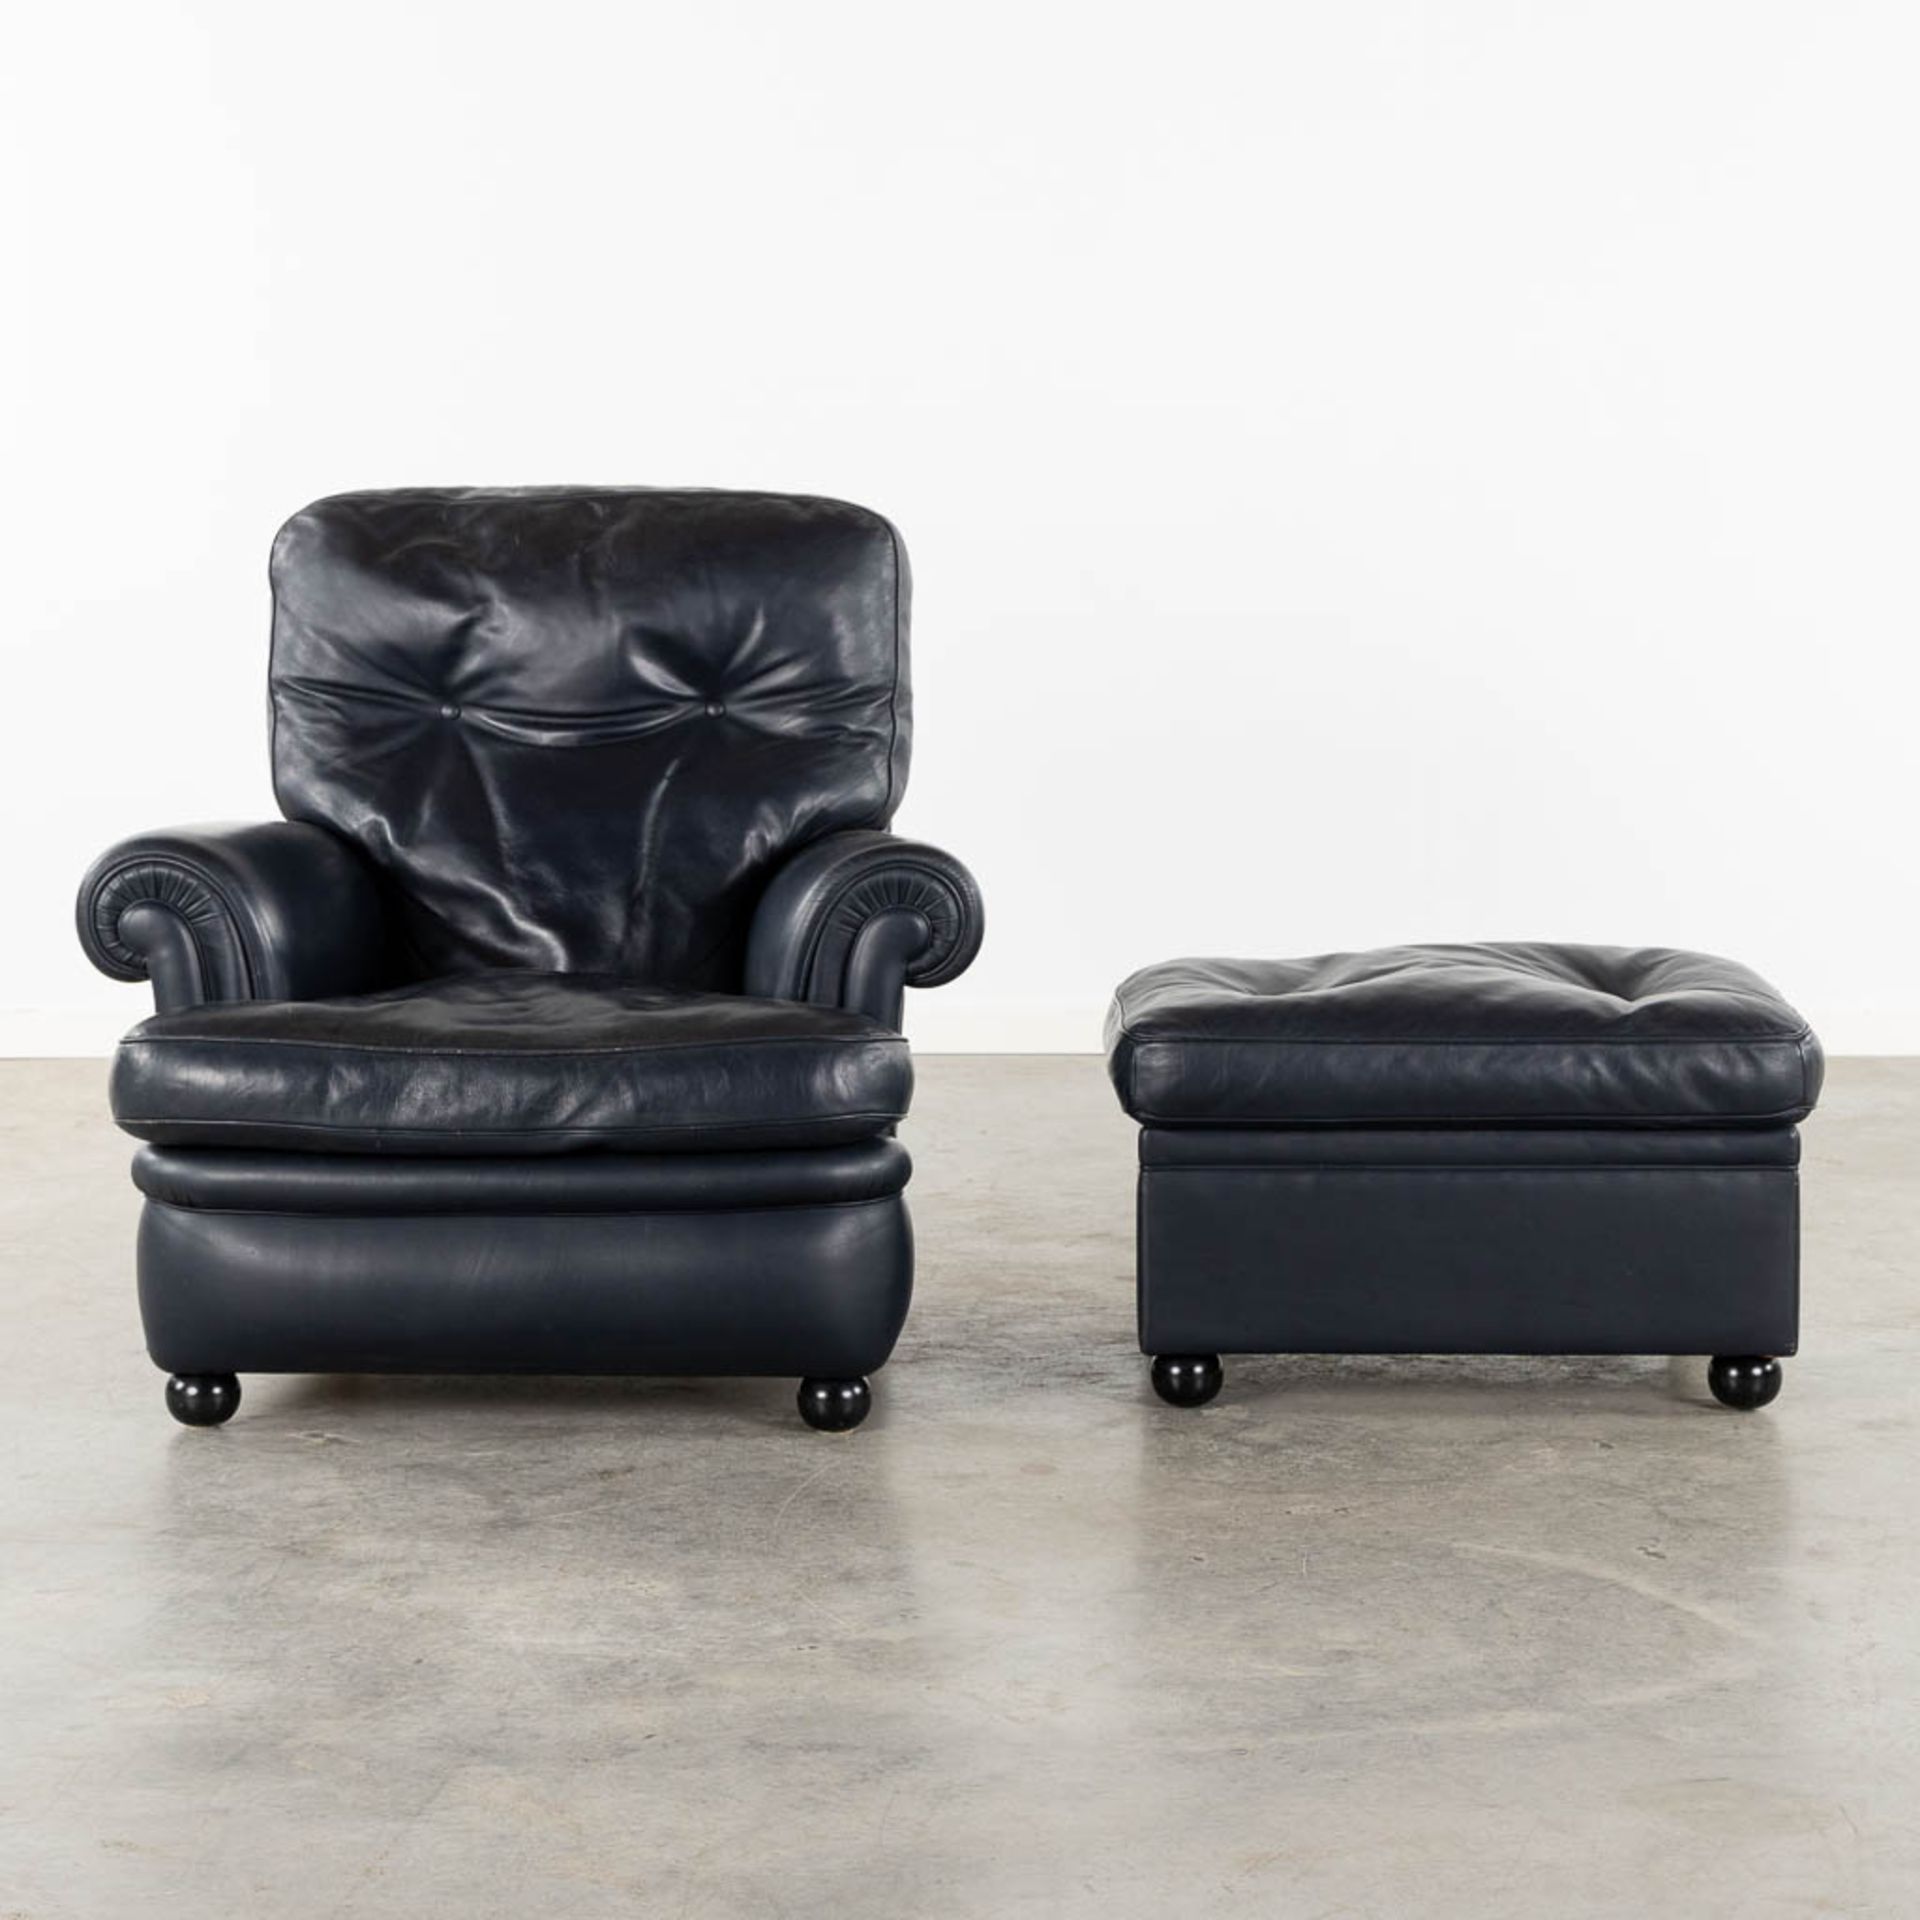 Poltrona Frau, a leather relaxing chair and matching ottoman. (L:90 x W:90 x H:88 cm) - Bild 3 aus 16